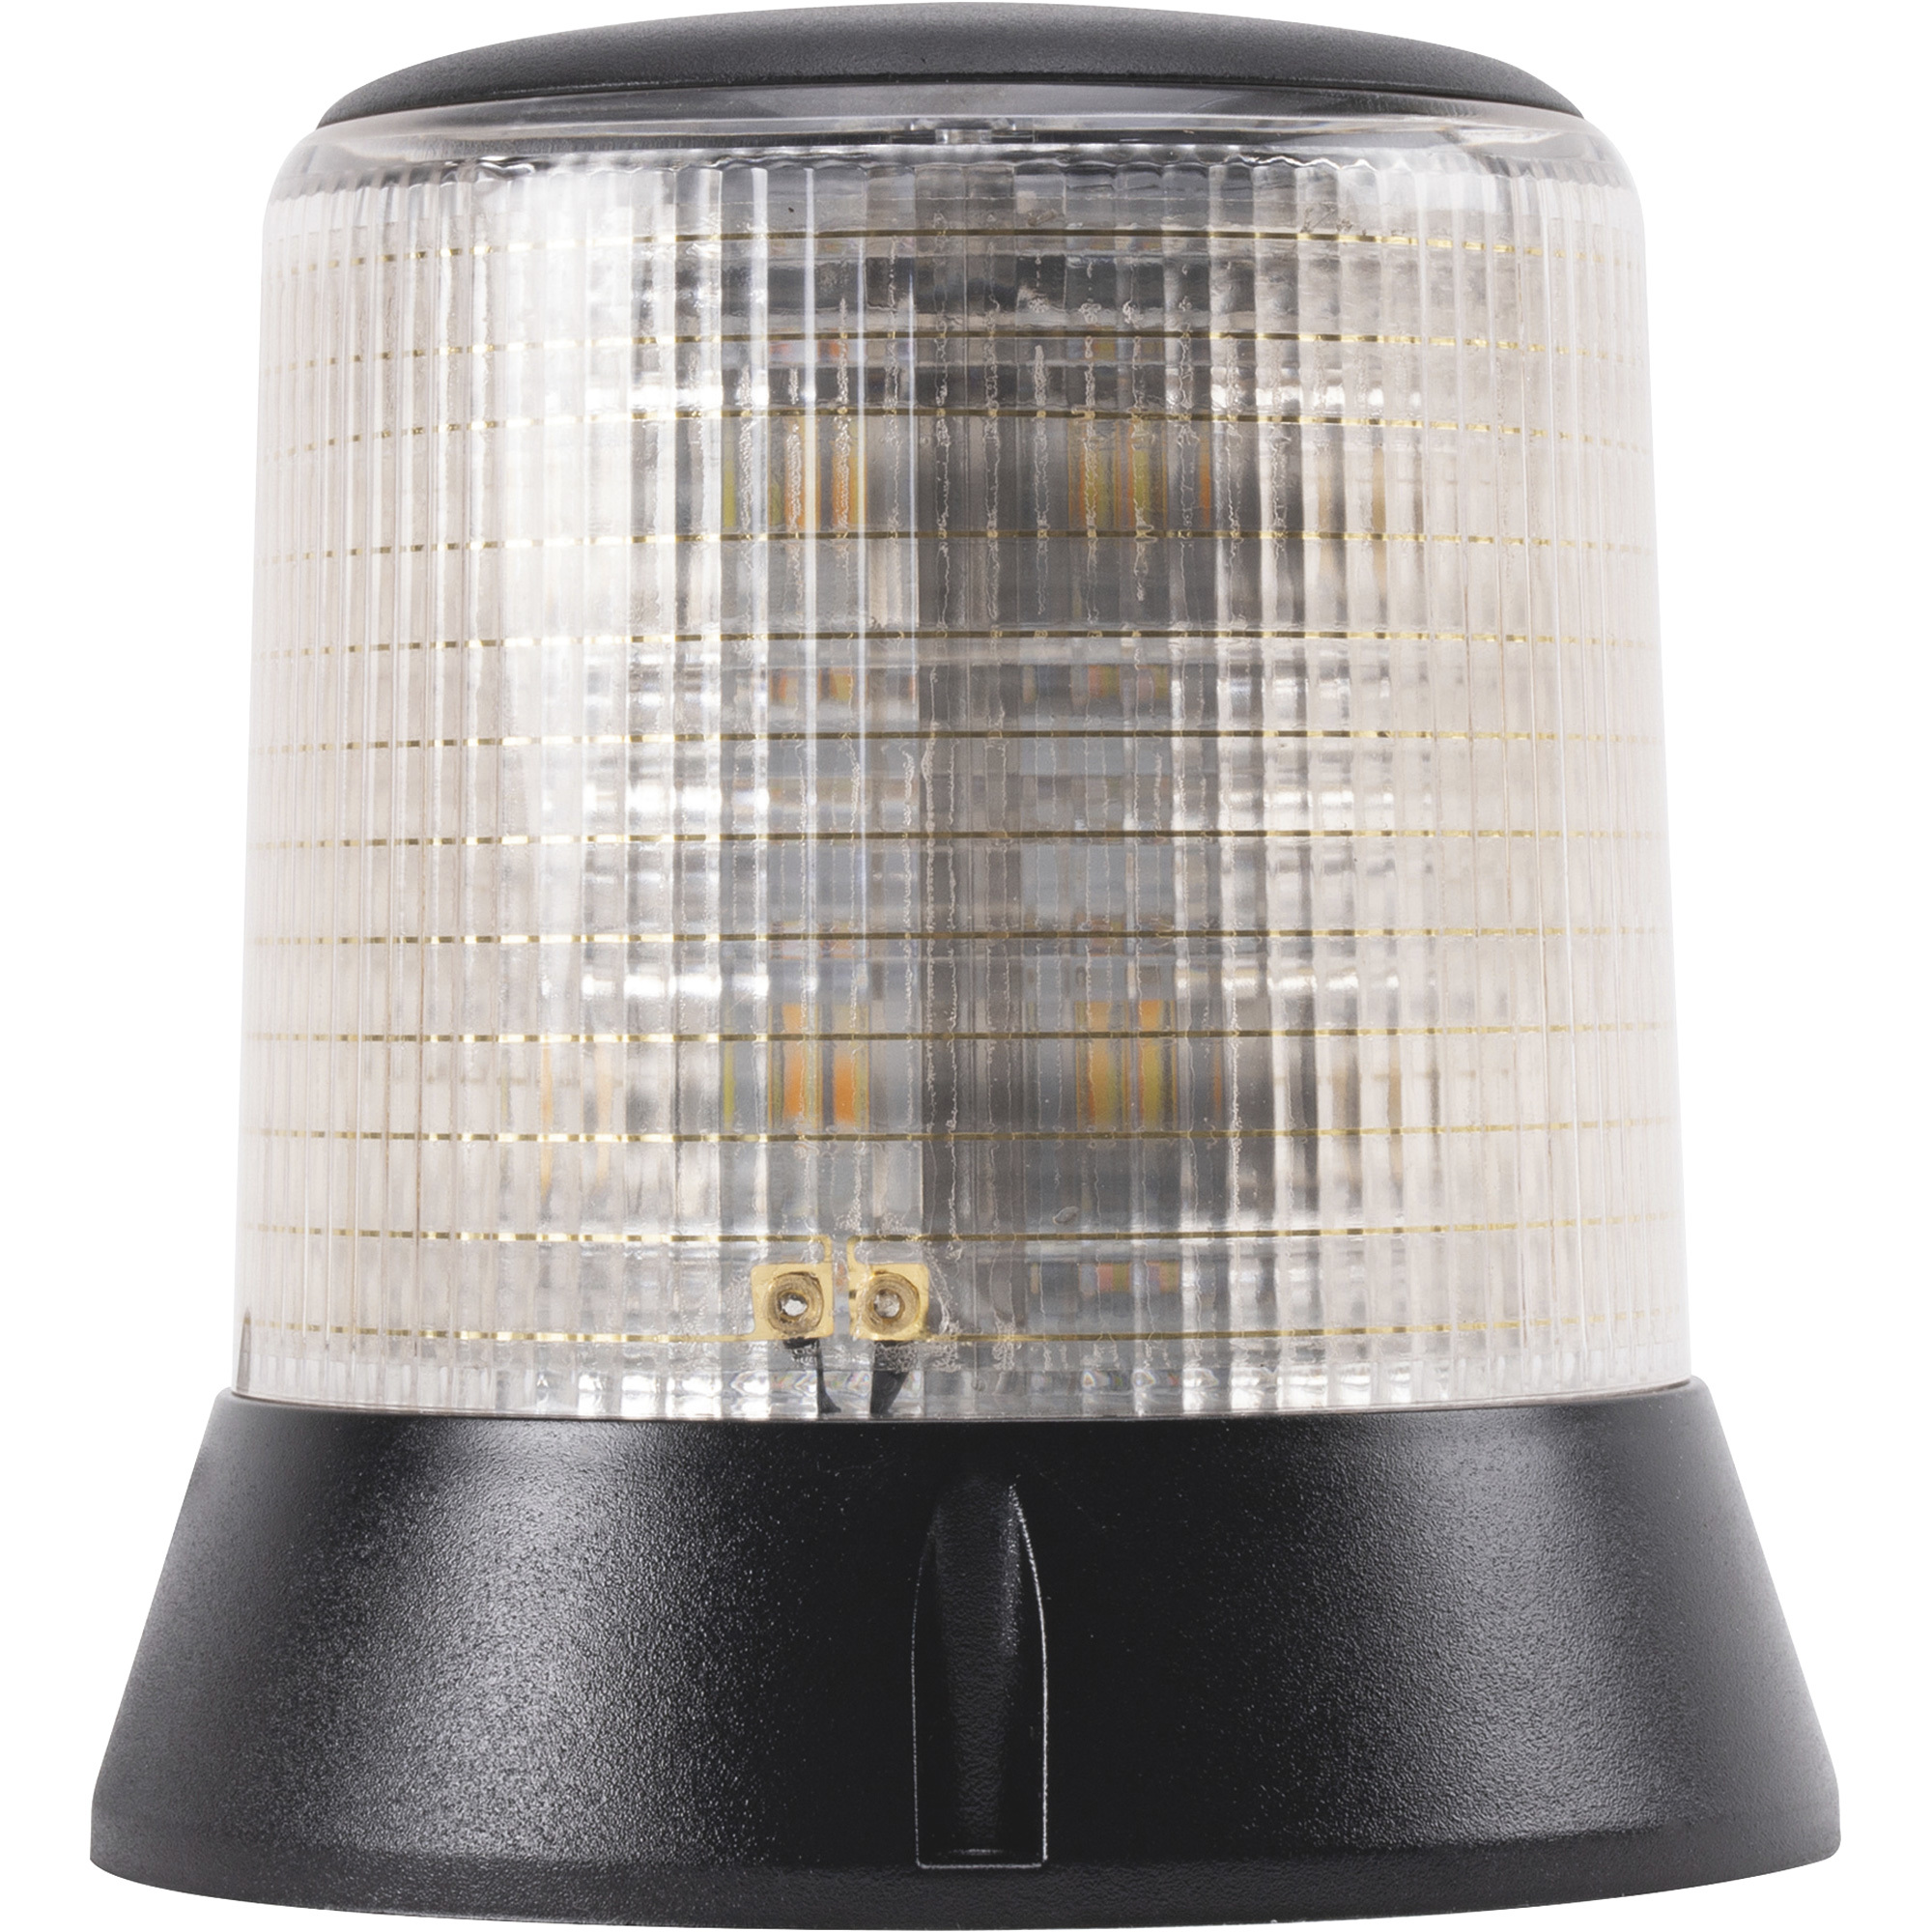 Blazer LED Tall Heated Beacon Warning Light â 12V, Clear Lens/Amber and White LEDs, Magnetic Mount, Model C41CACH